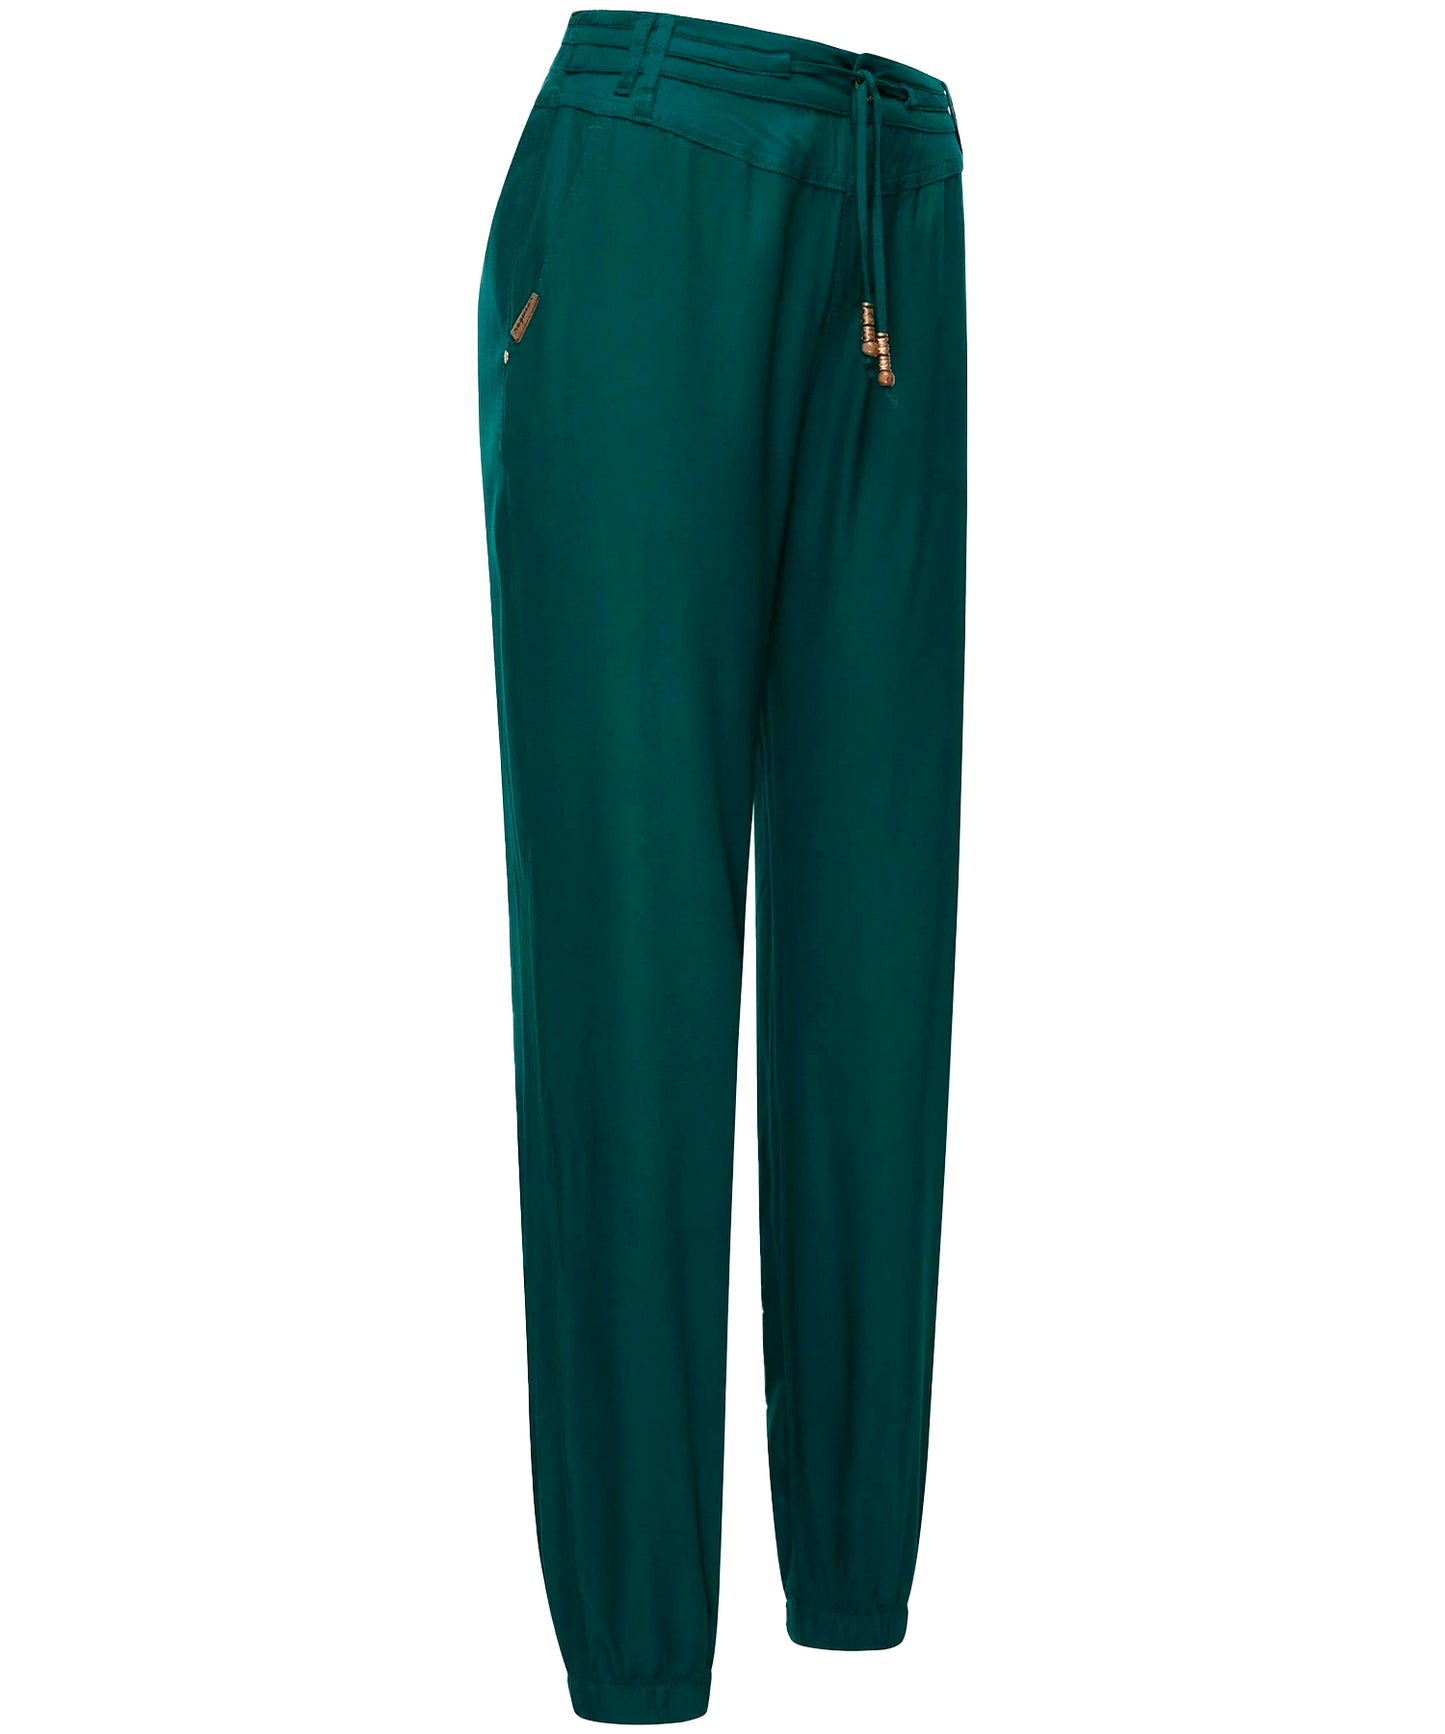 ragwear-pantalon-de-mujer-talin-cintura-con-cordón-frescos-holgados-color-verde.